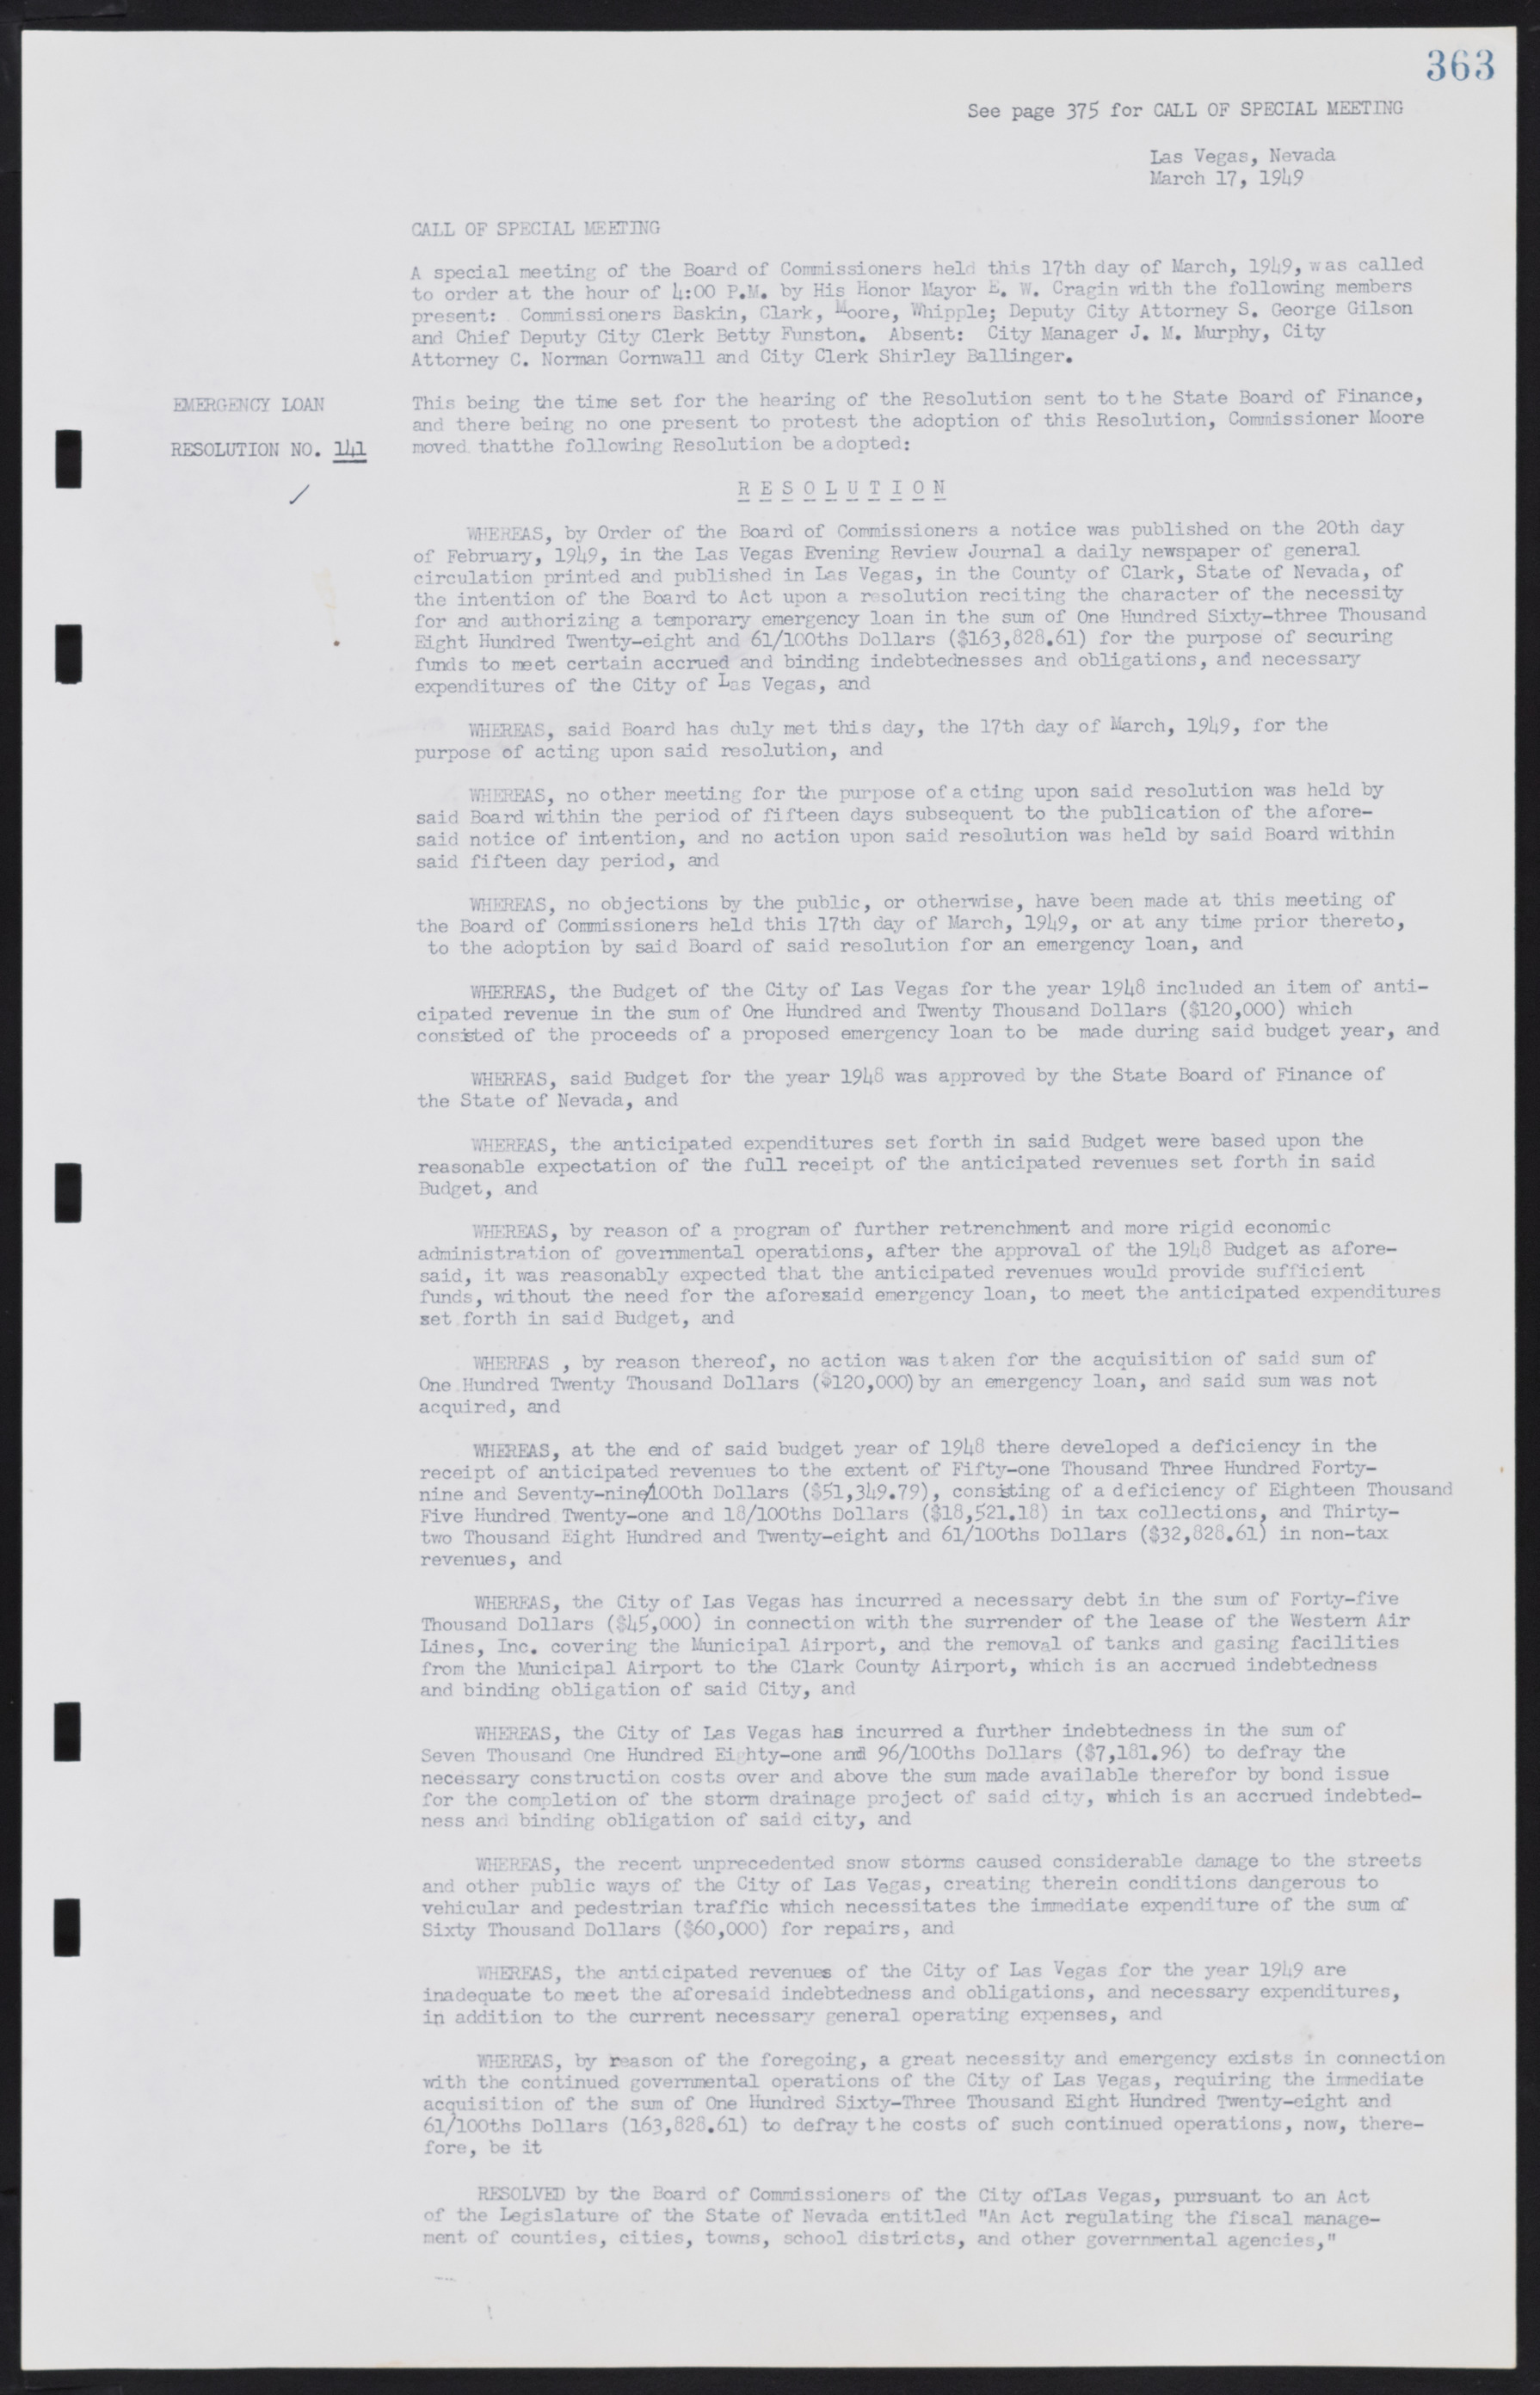 Las Vegas City Commission Minutes, January 7, 1947 to October 26, 1949, lvc000006-393